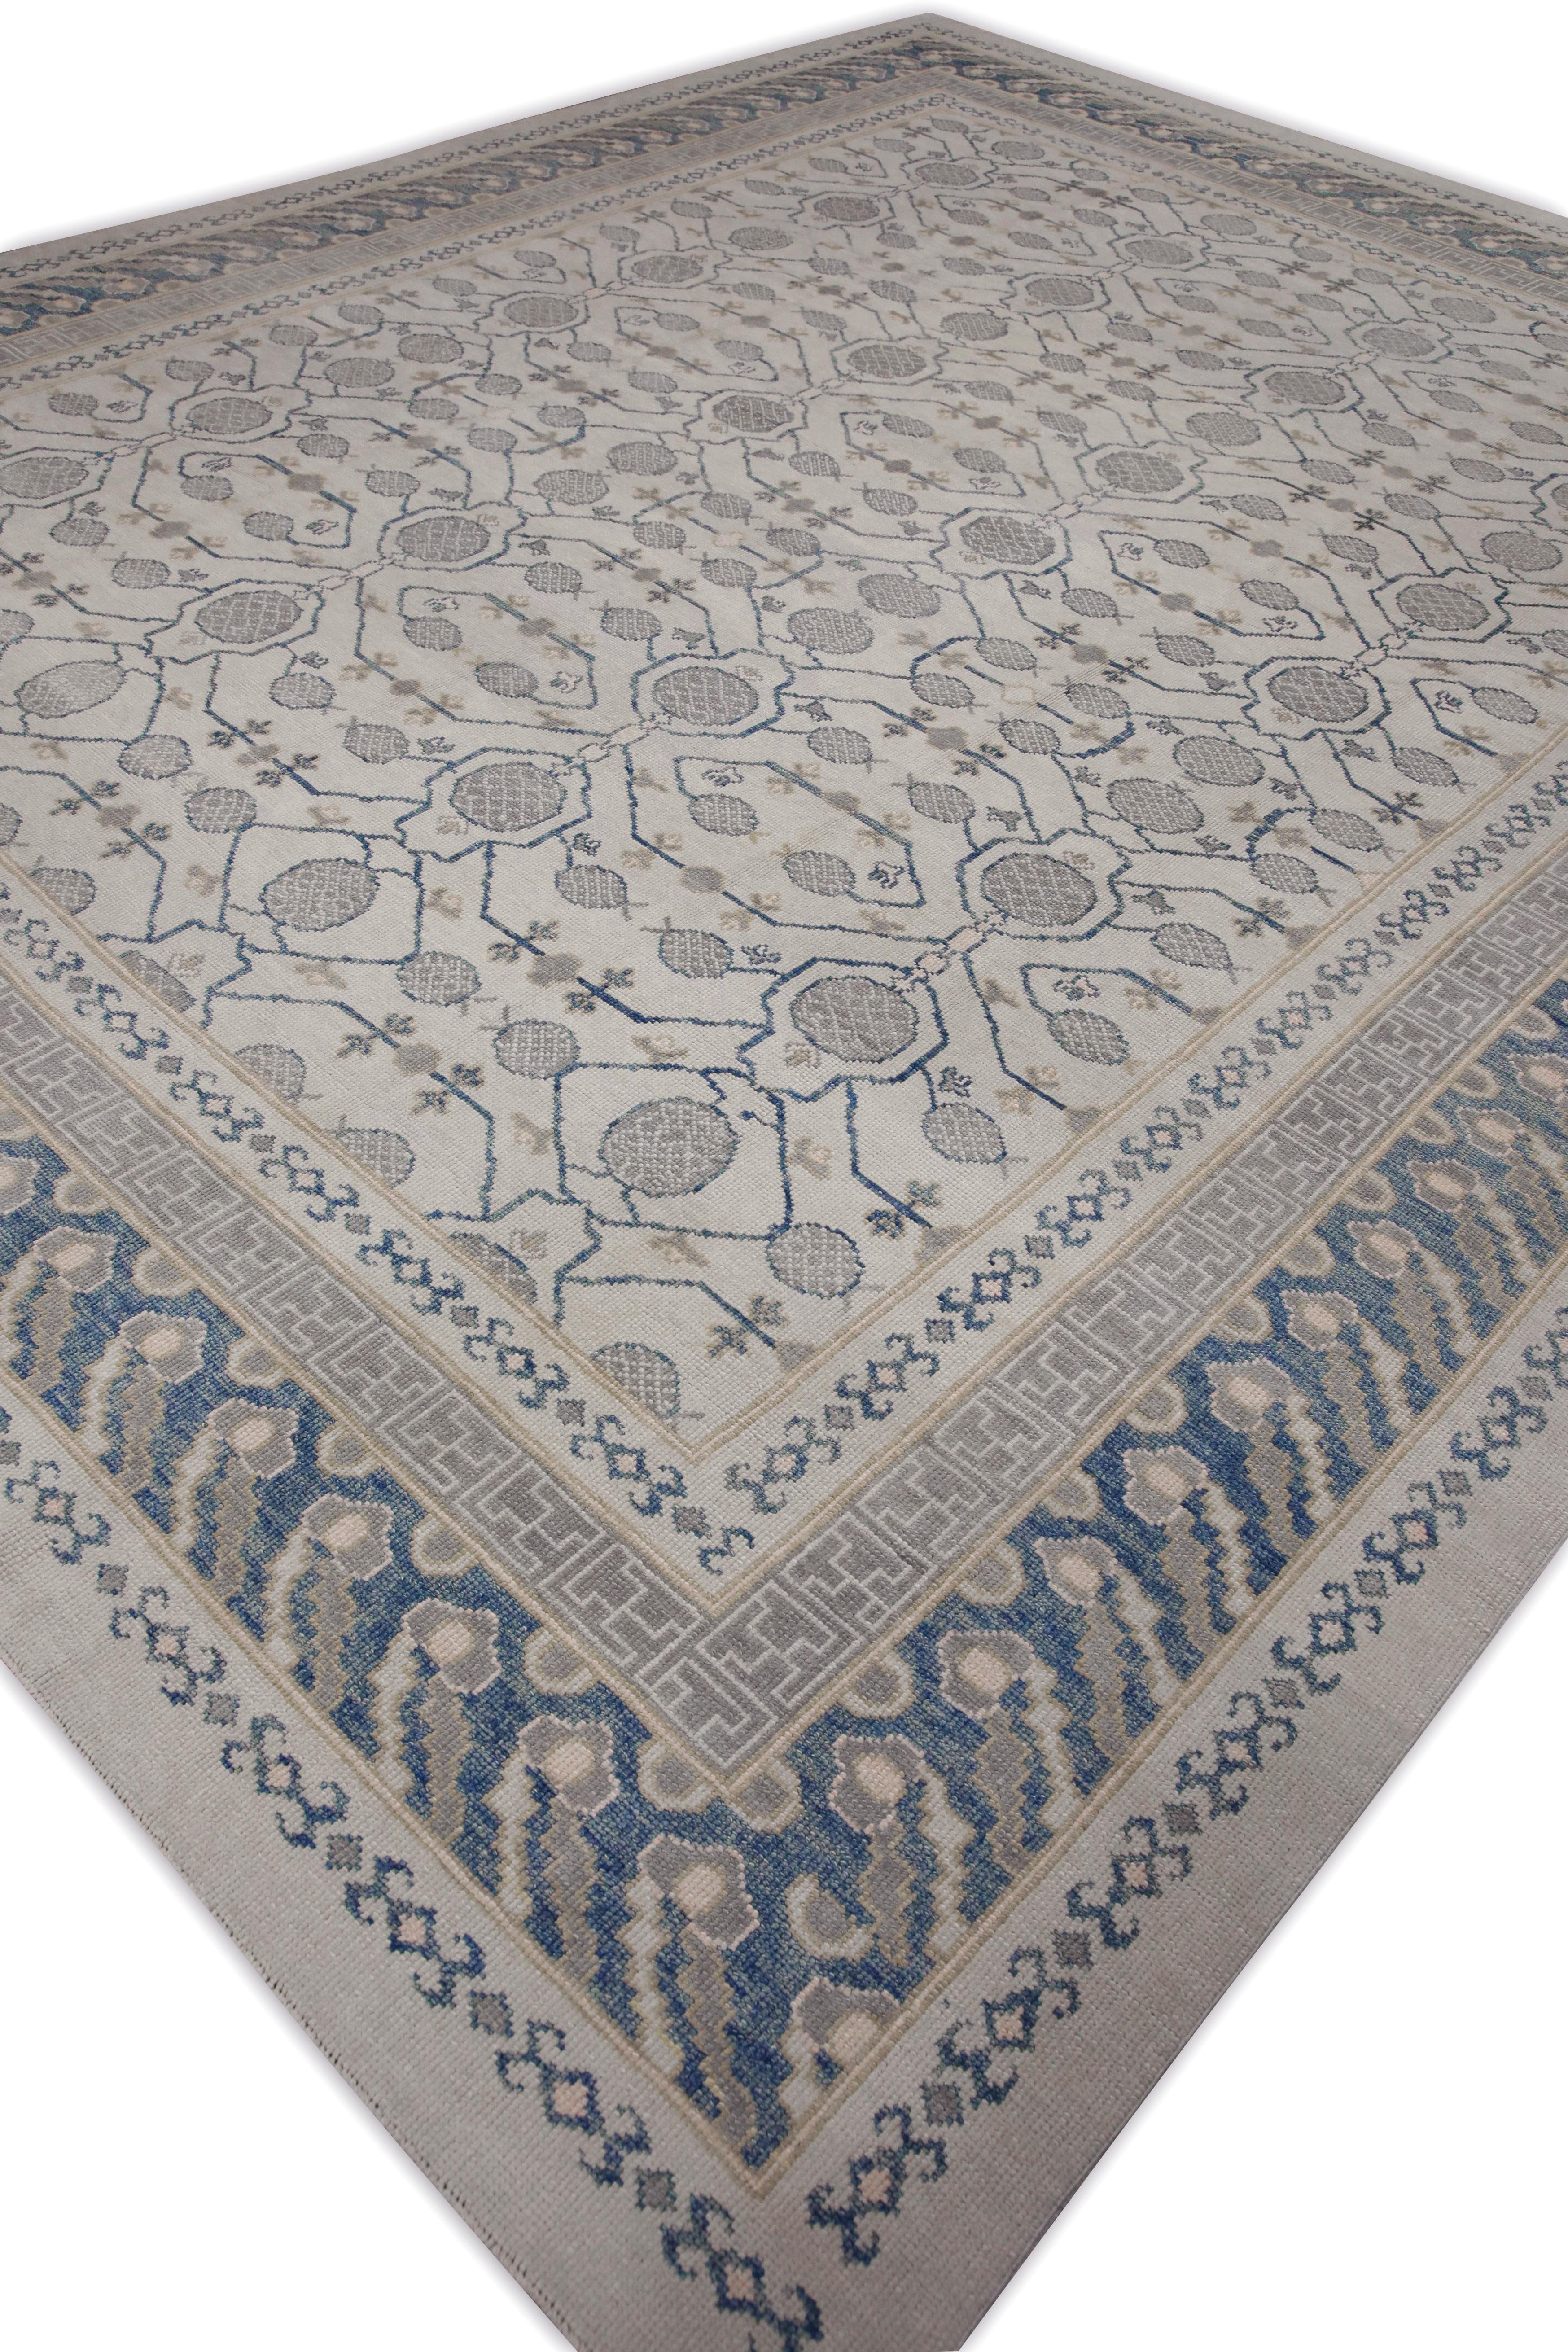 Contemporary Cream & Blue Geometric Design Handwoven Wool Turkish Oushak Rug 12' X 14'6